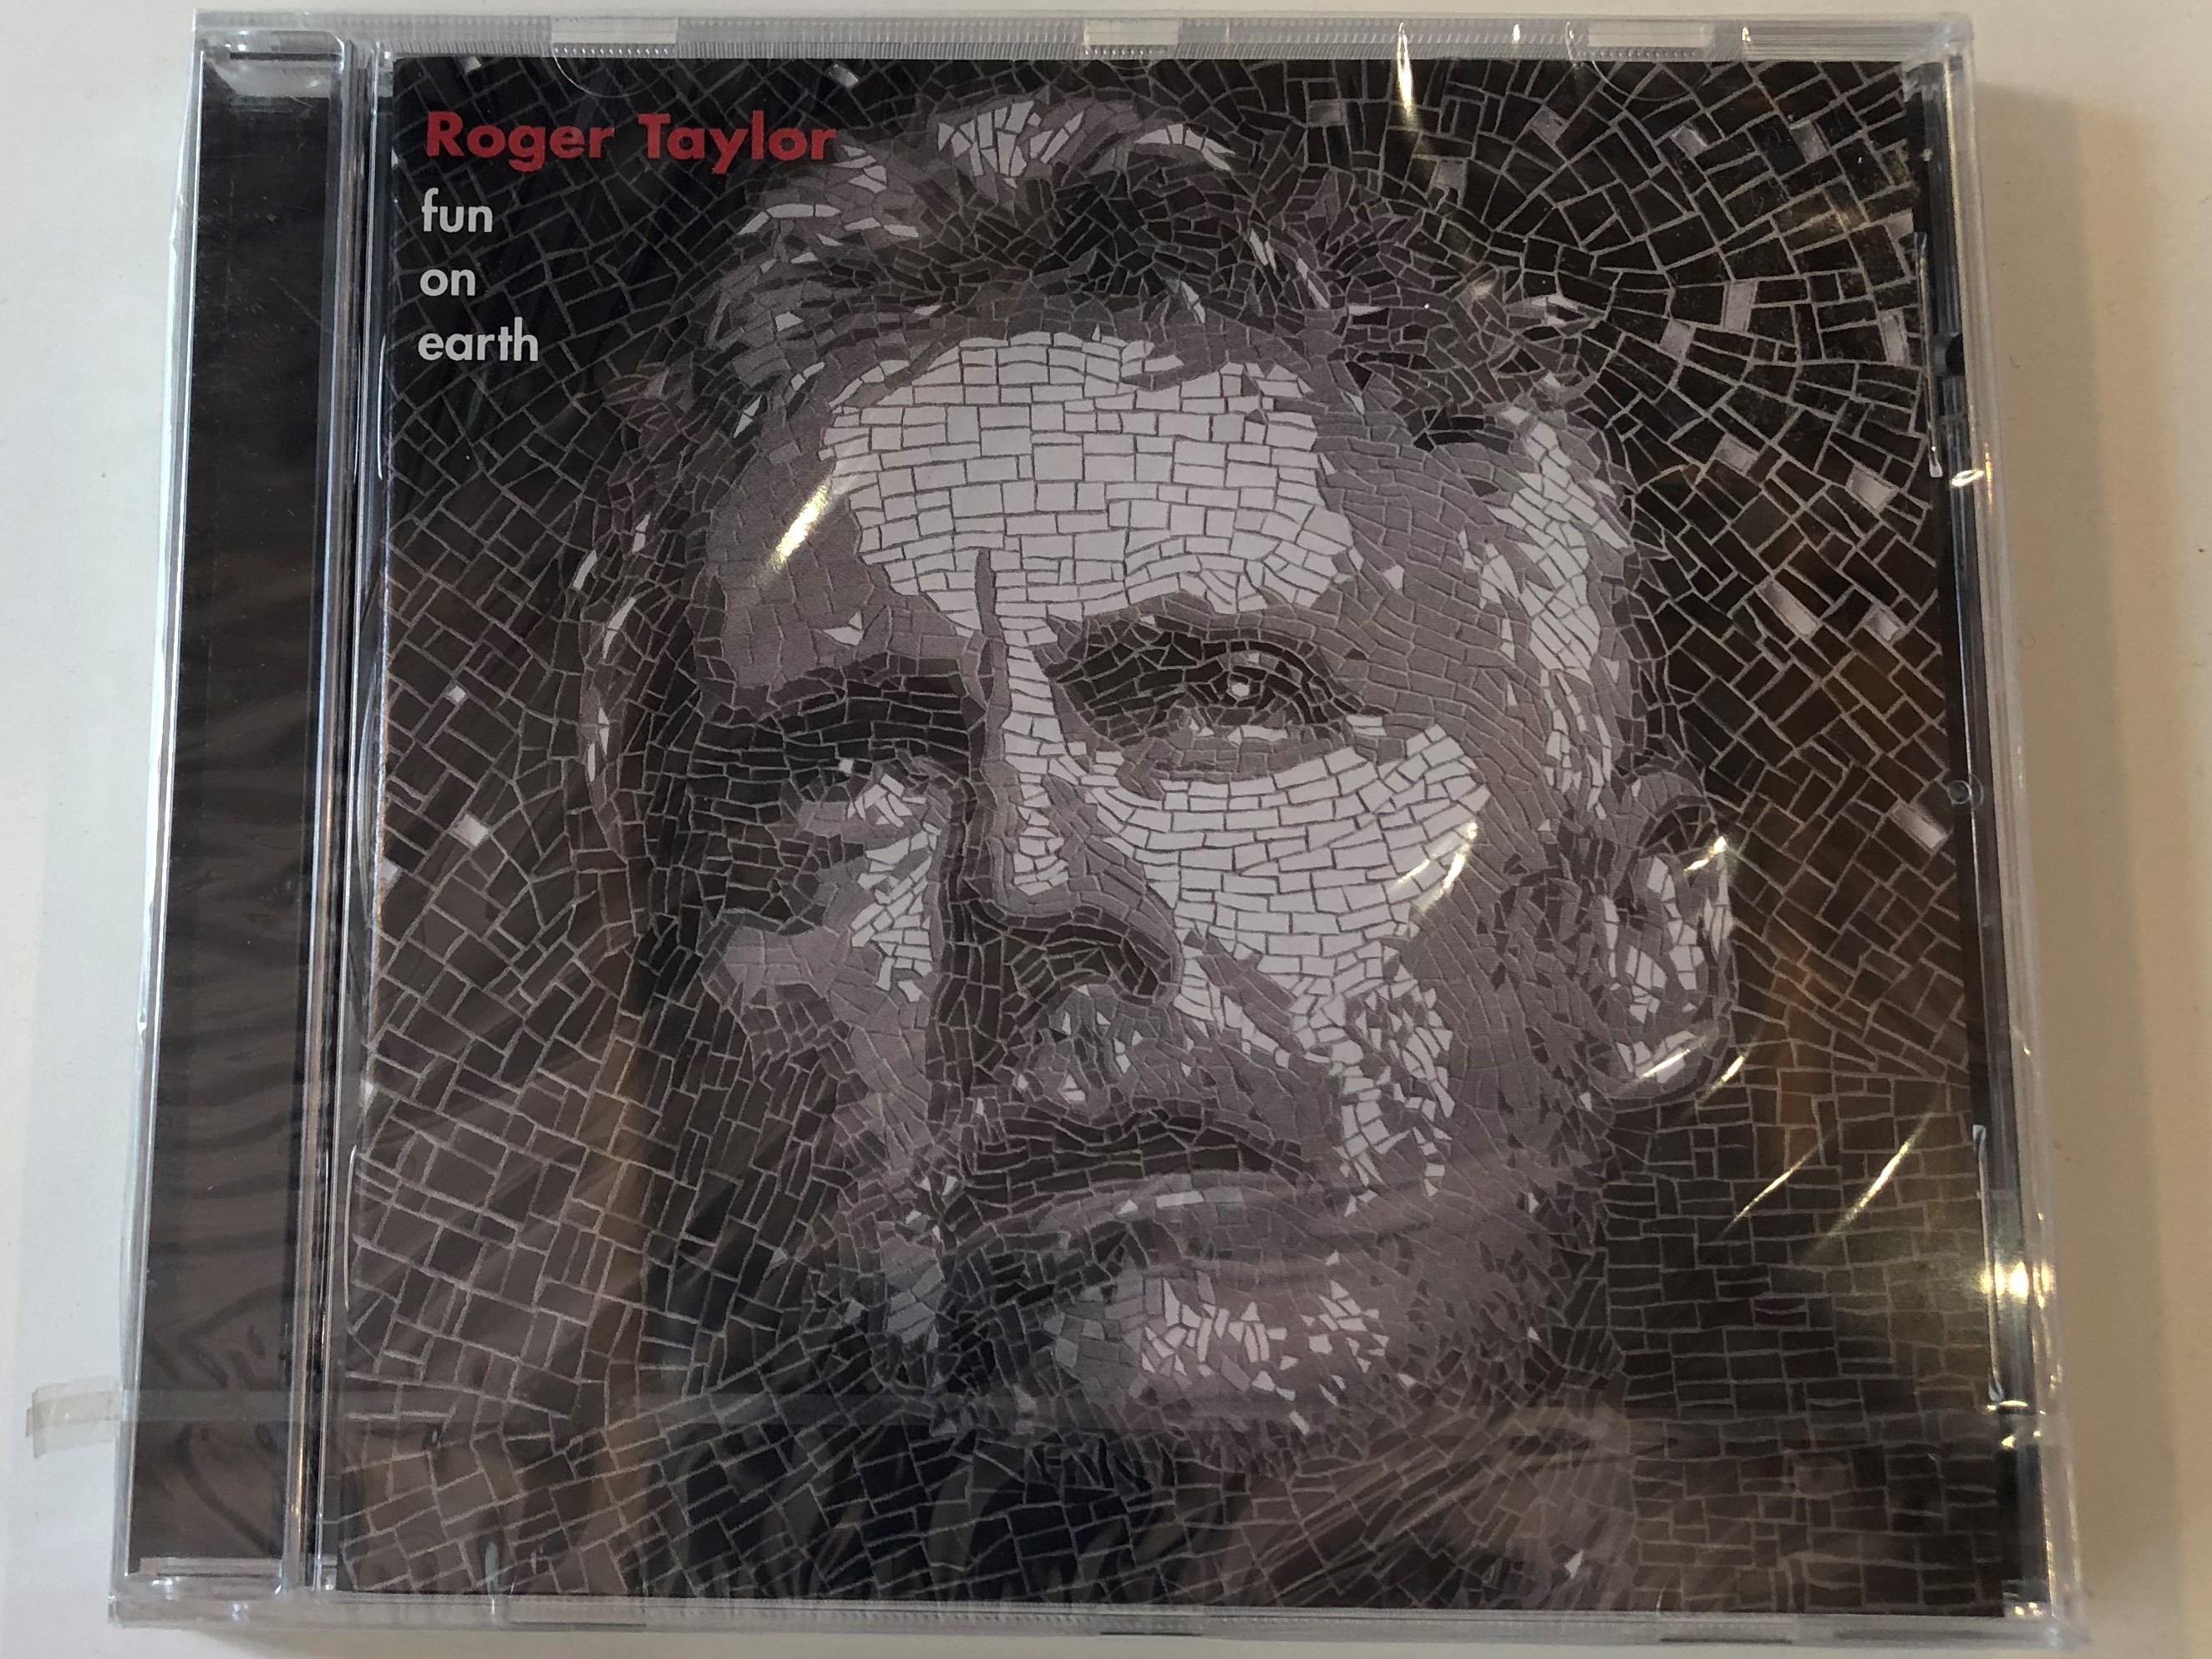 roger-taylor-fun-on-earth-virgin-emi-records-audio-cd-2013-0602537569984-1-.jpg